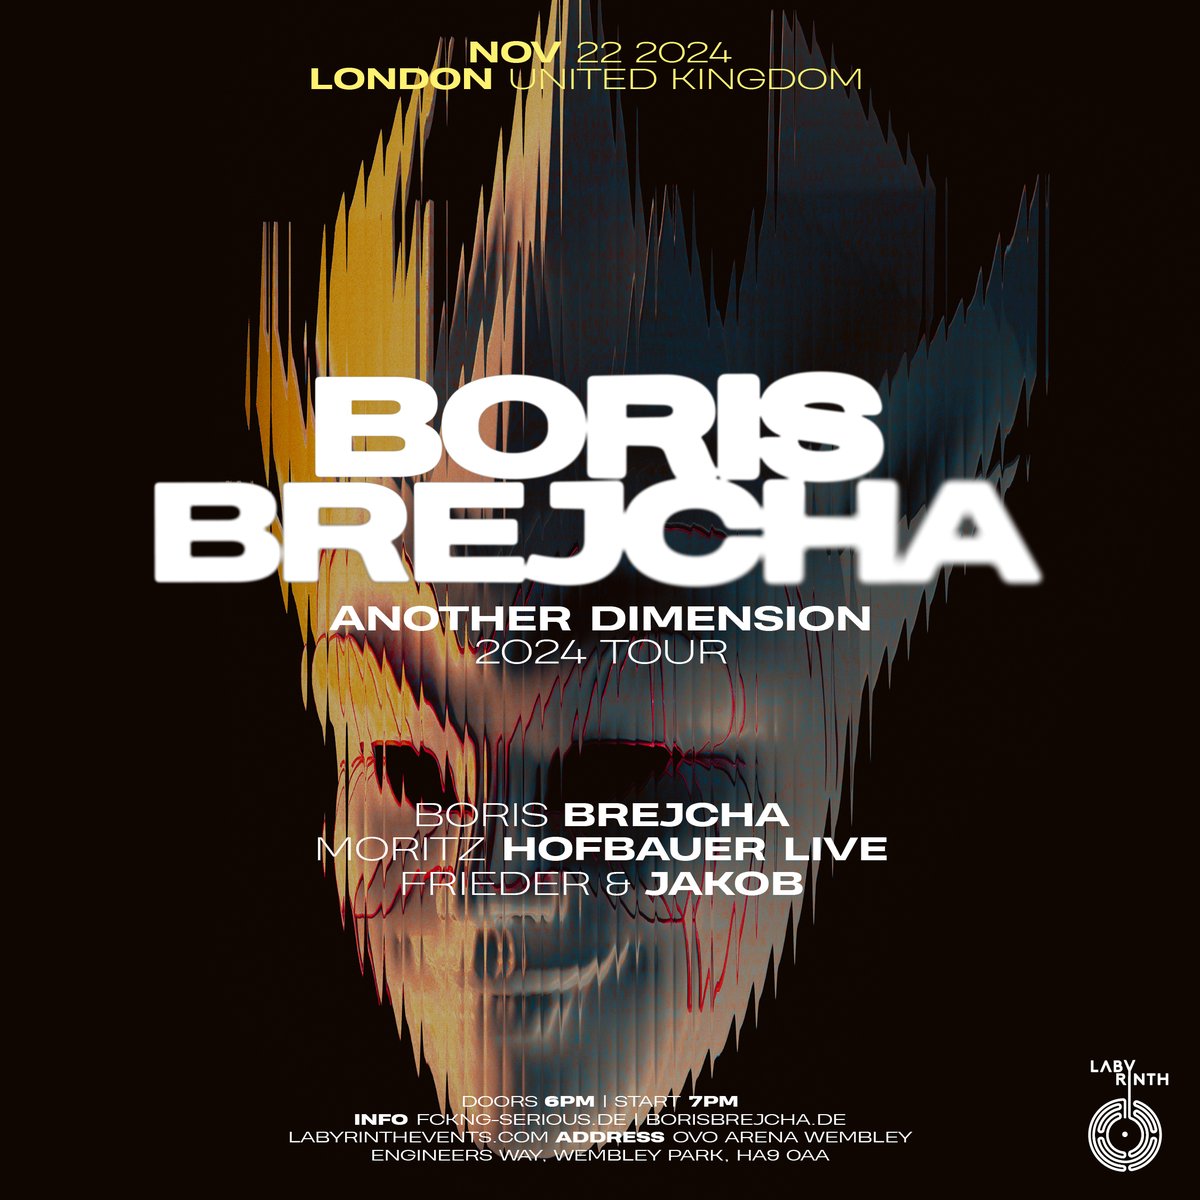 Another Dimension 2024 Tour 🃏 LONDON 🇬🇧 NOV 22 Tickets are on sale now 🎫 labyrinthevents.com/borisbrejcha?r… _ #concert #anotherdimension #london #unitedkingdom